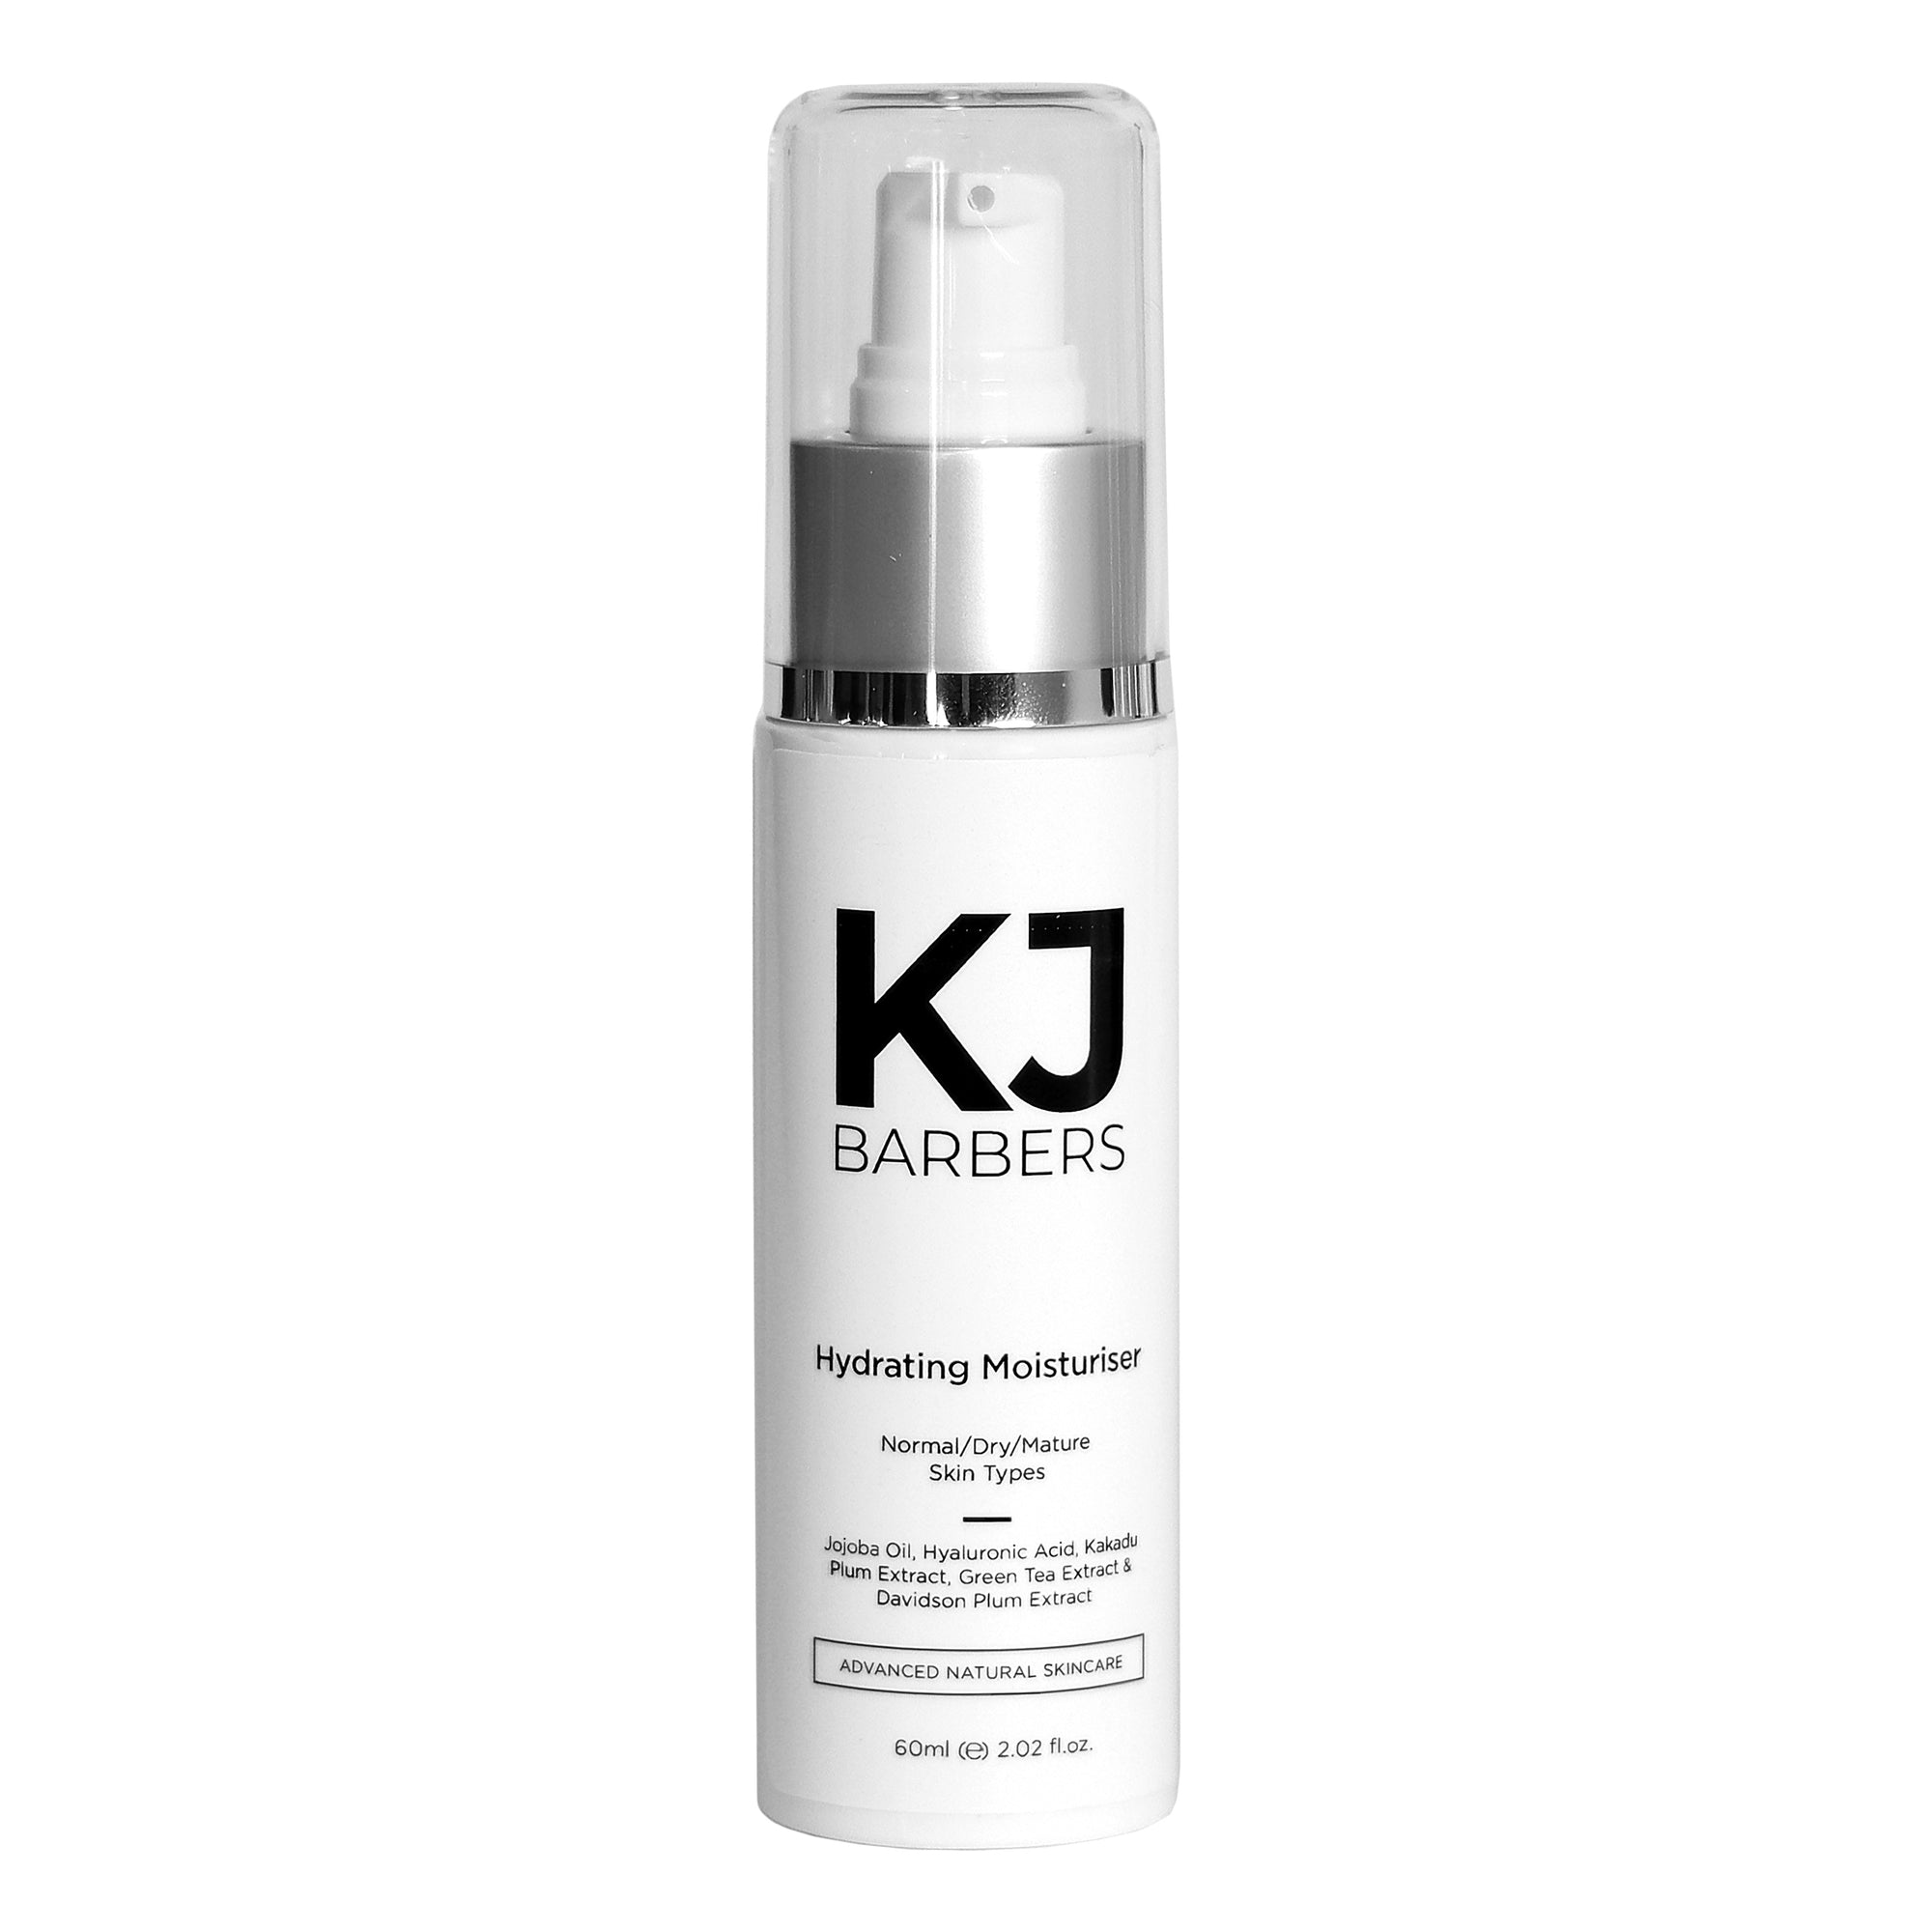 KJ Barbers Hydrating Moisturiser uses natural oils like jojoba helping to give the skin a matte and healthy appearance.